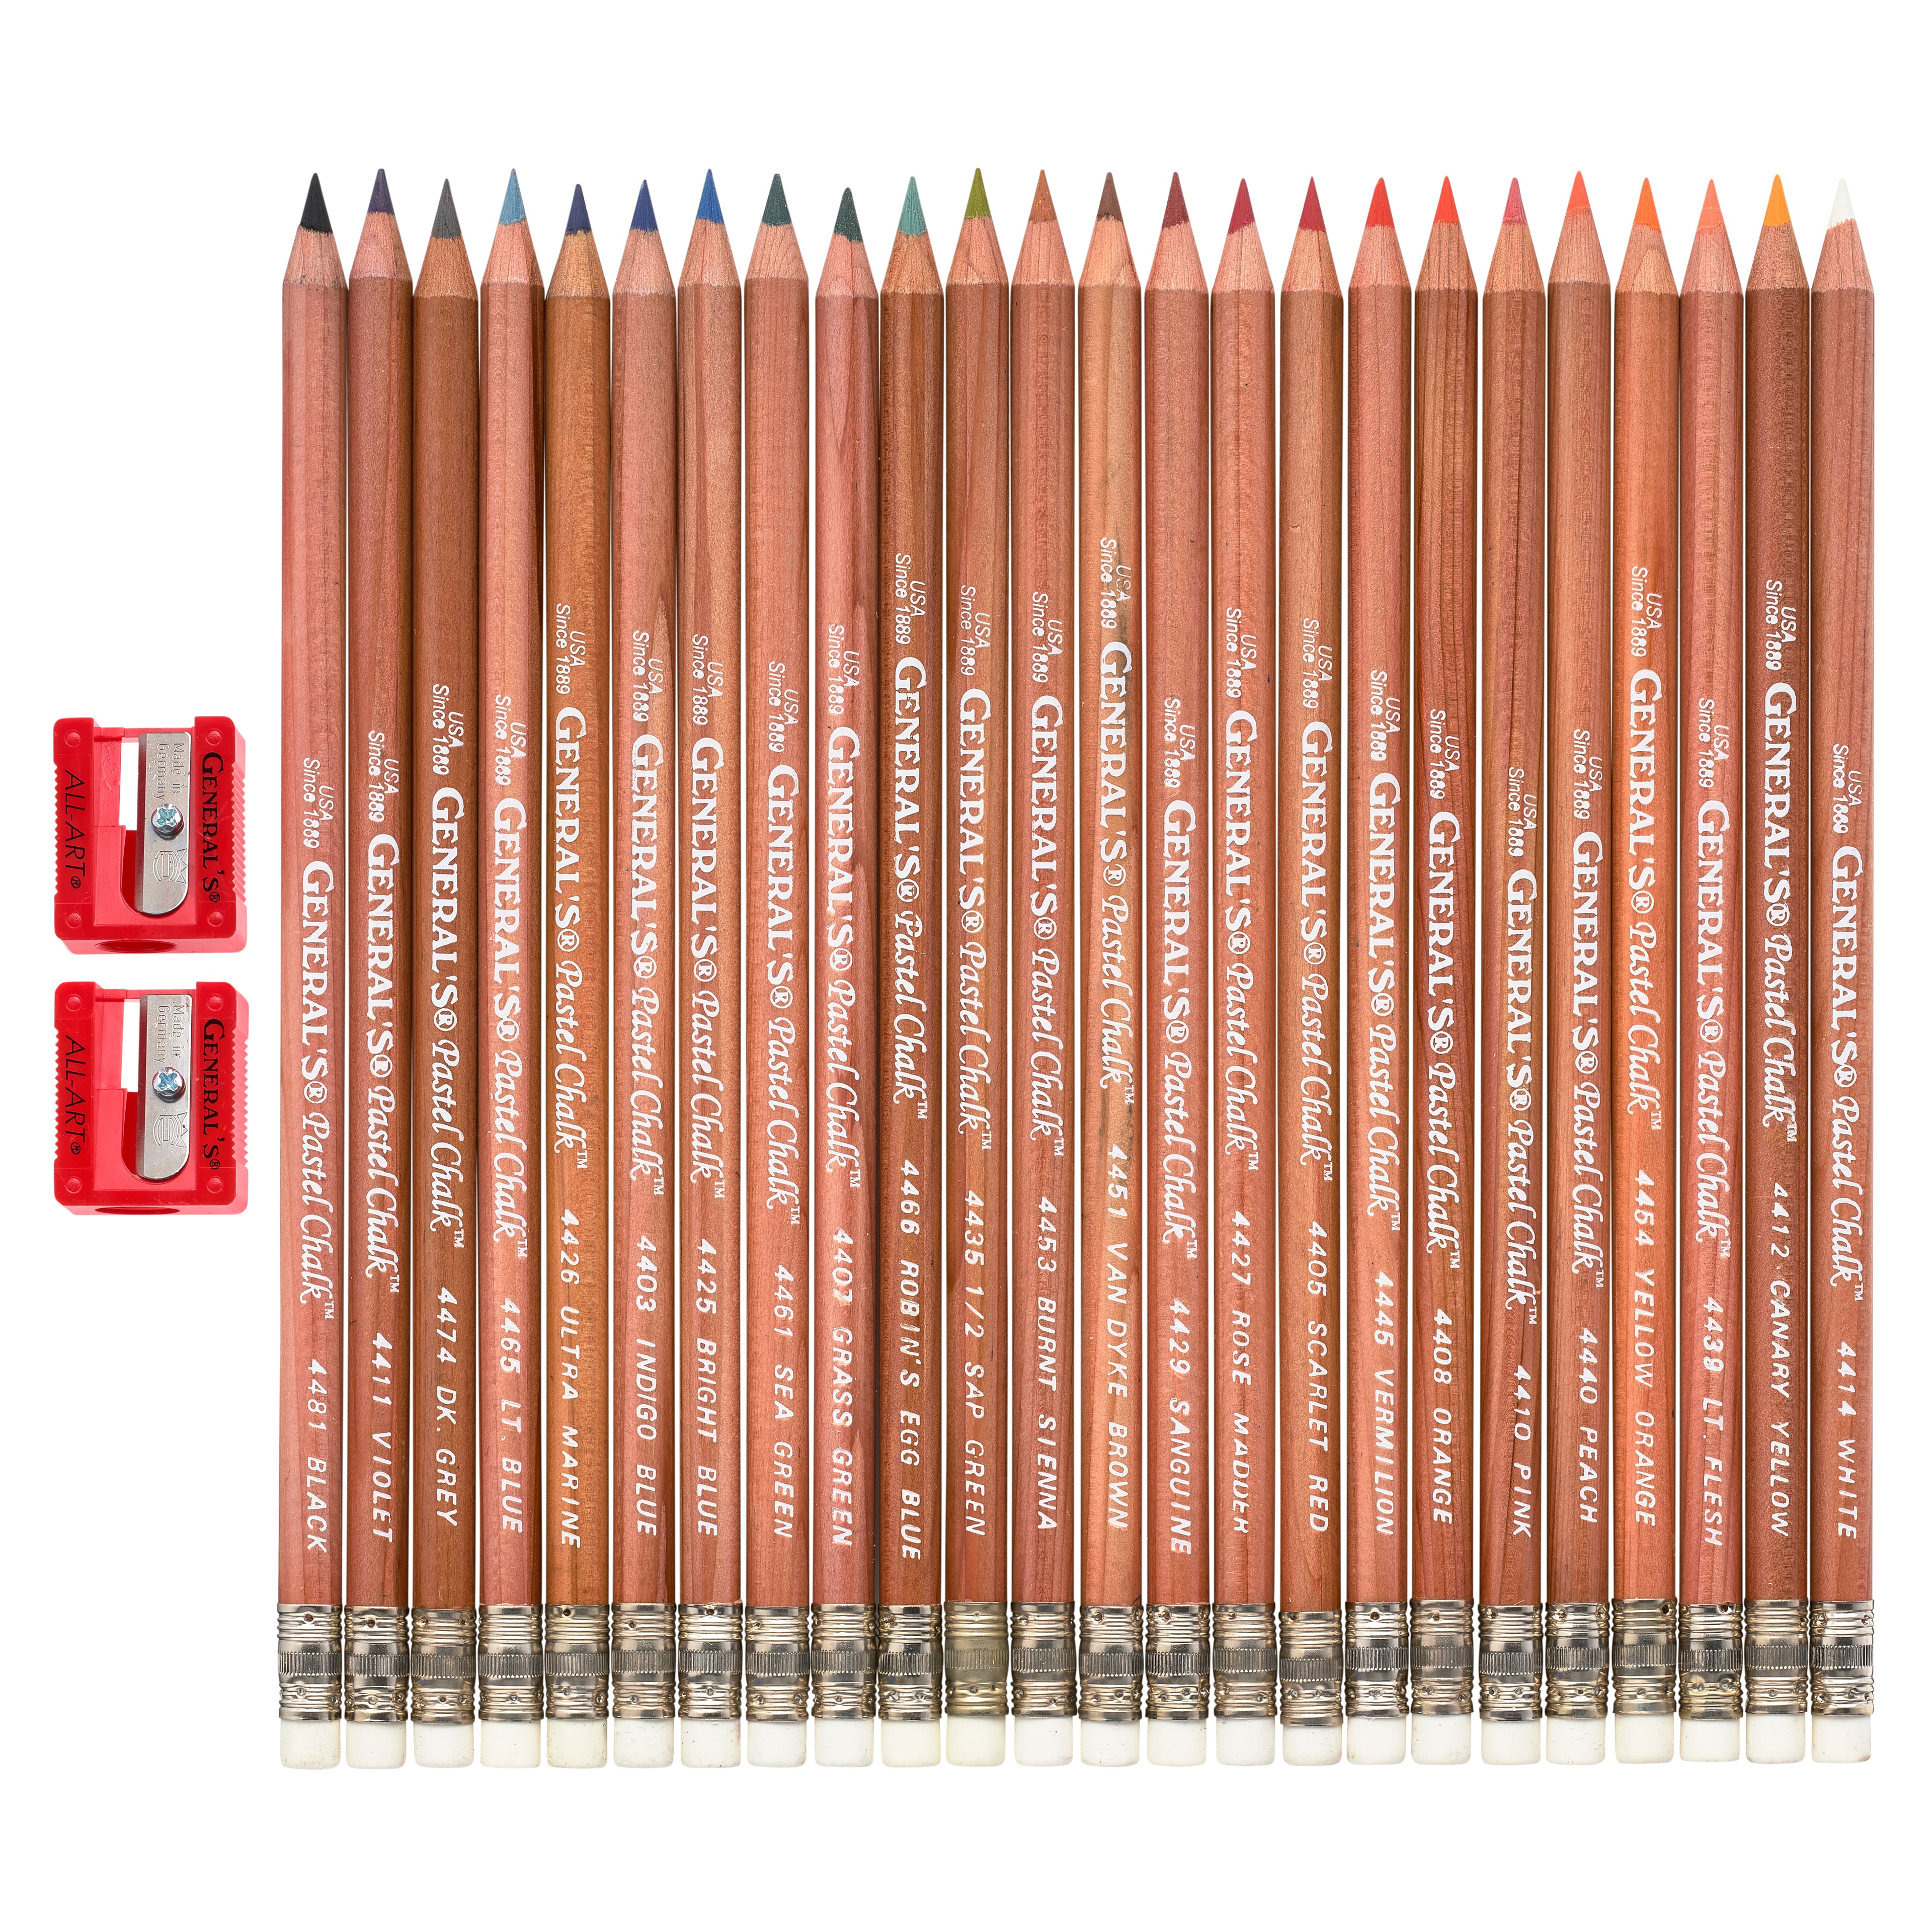 Jumbo Graphite Pencil Set by Artist's Loft™